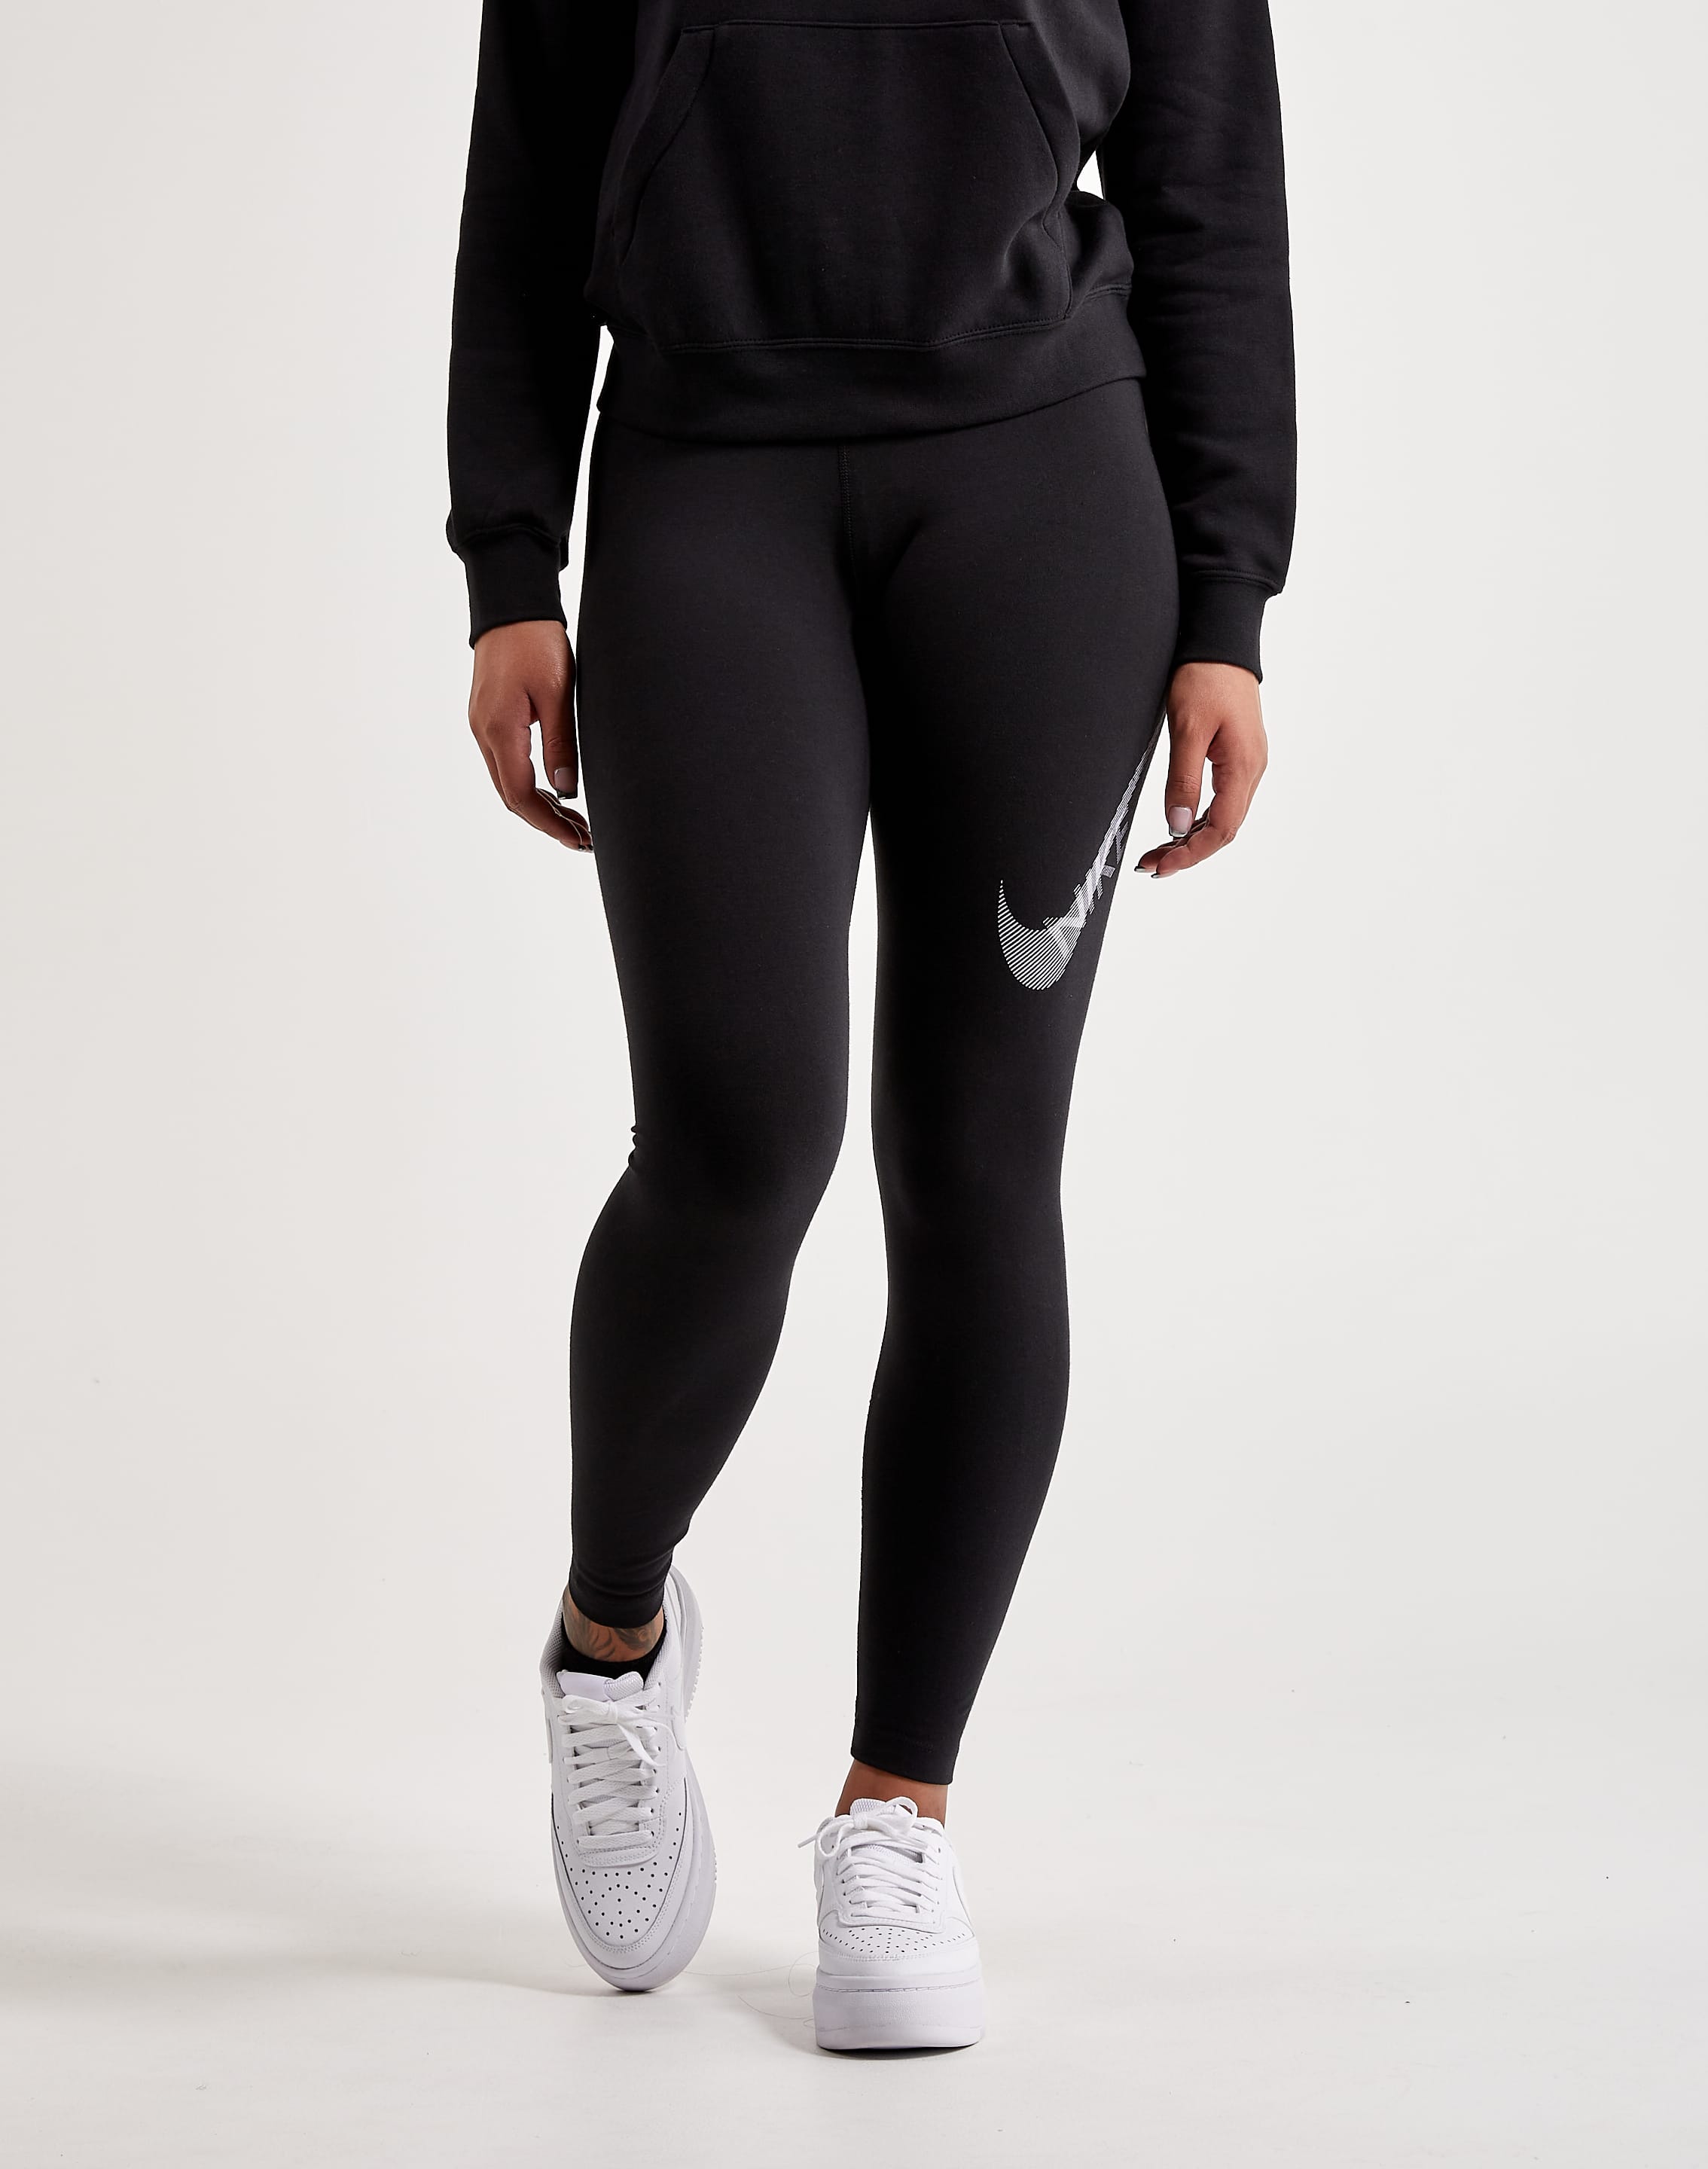 Nike Womens Colorblock One Leggings - Black | Life Style Sports EU